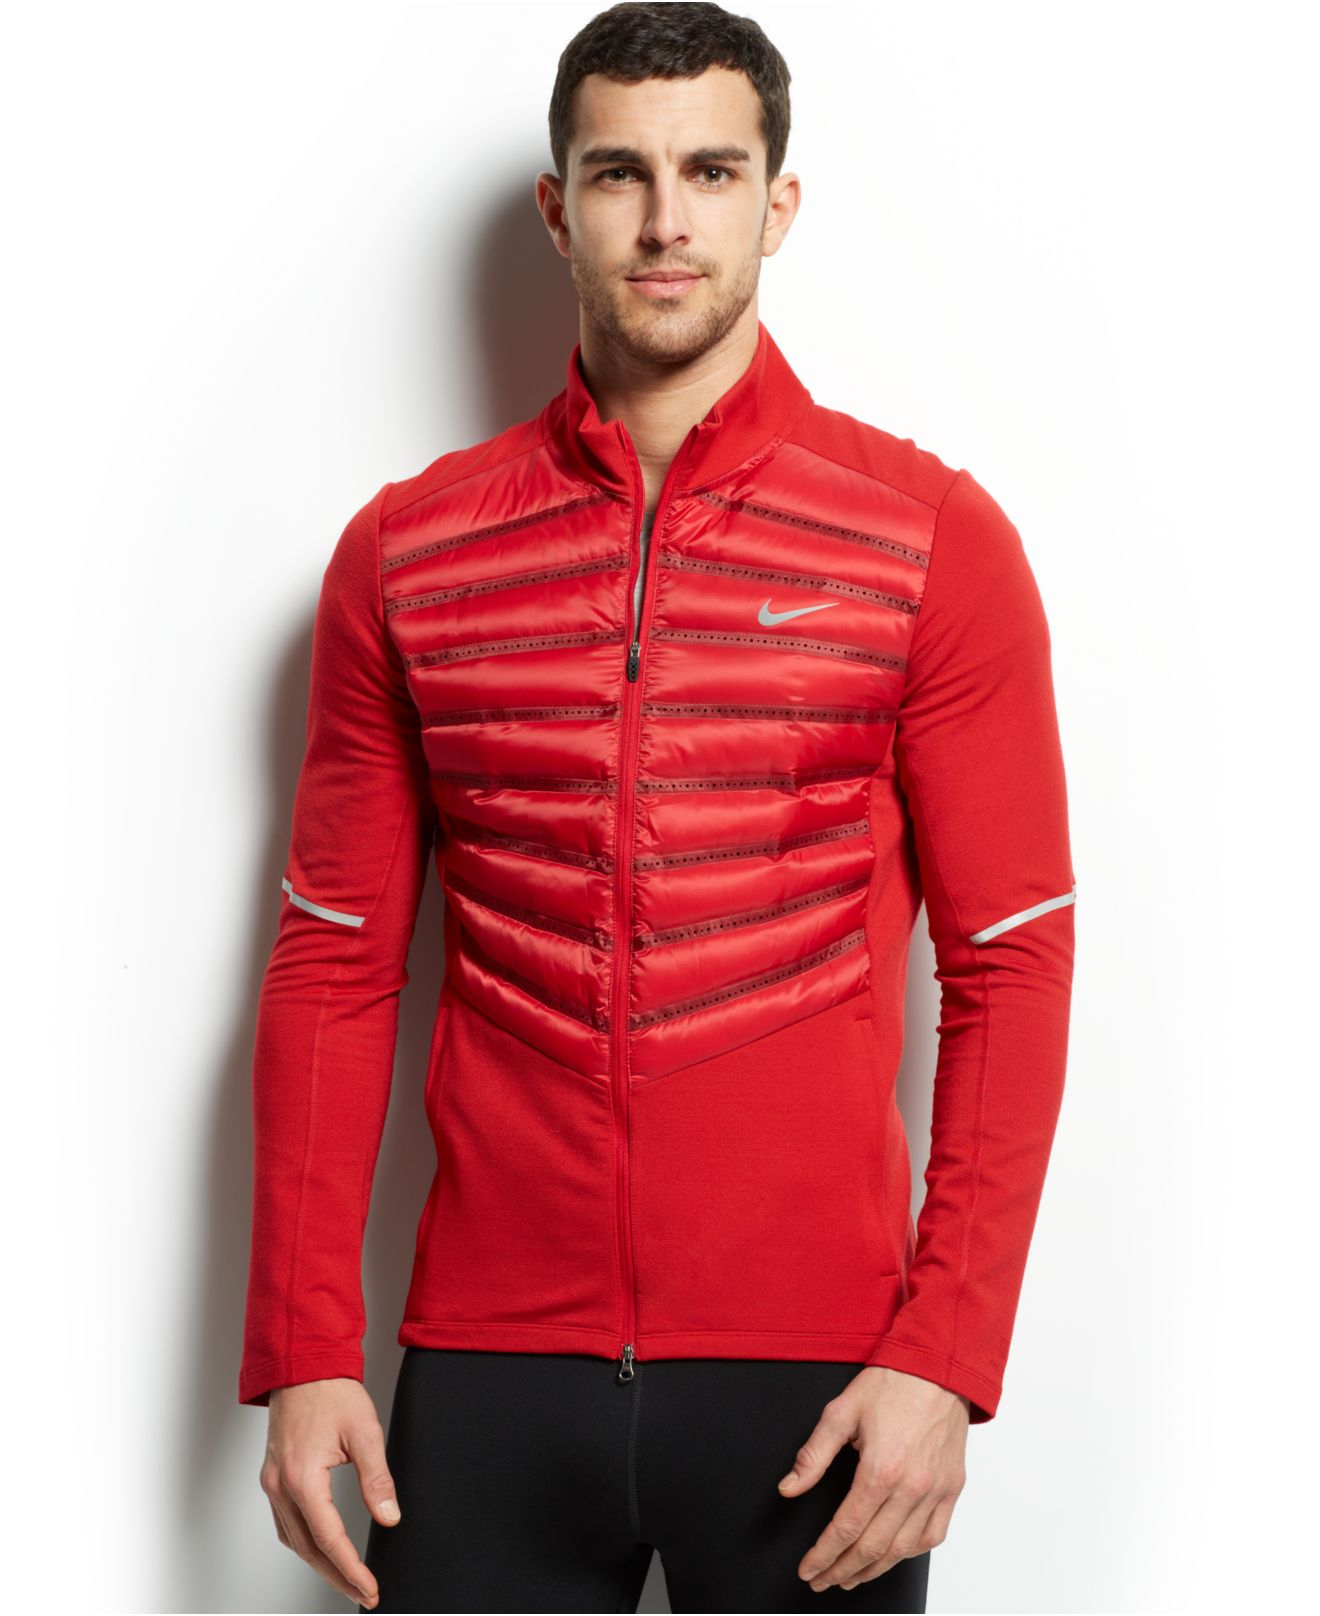 Lyst - Nike Aeroloft Hybrid Down Jacket in Red for Men